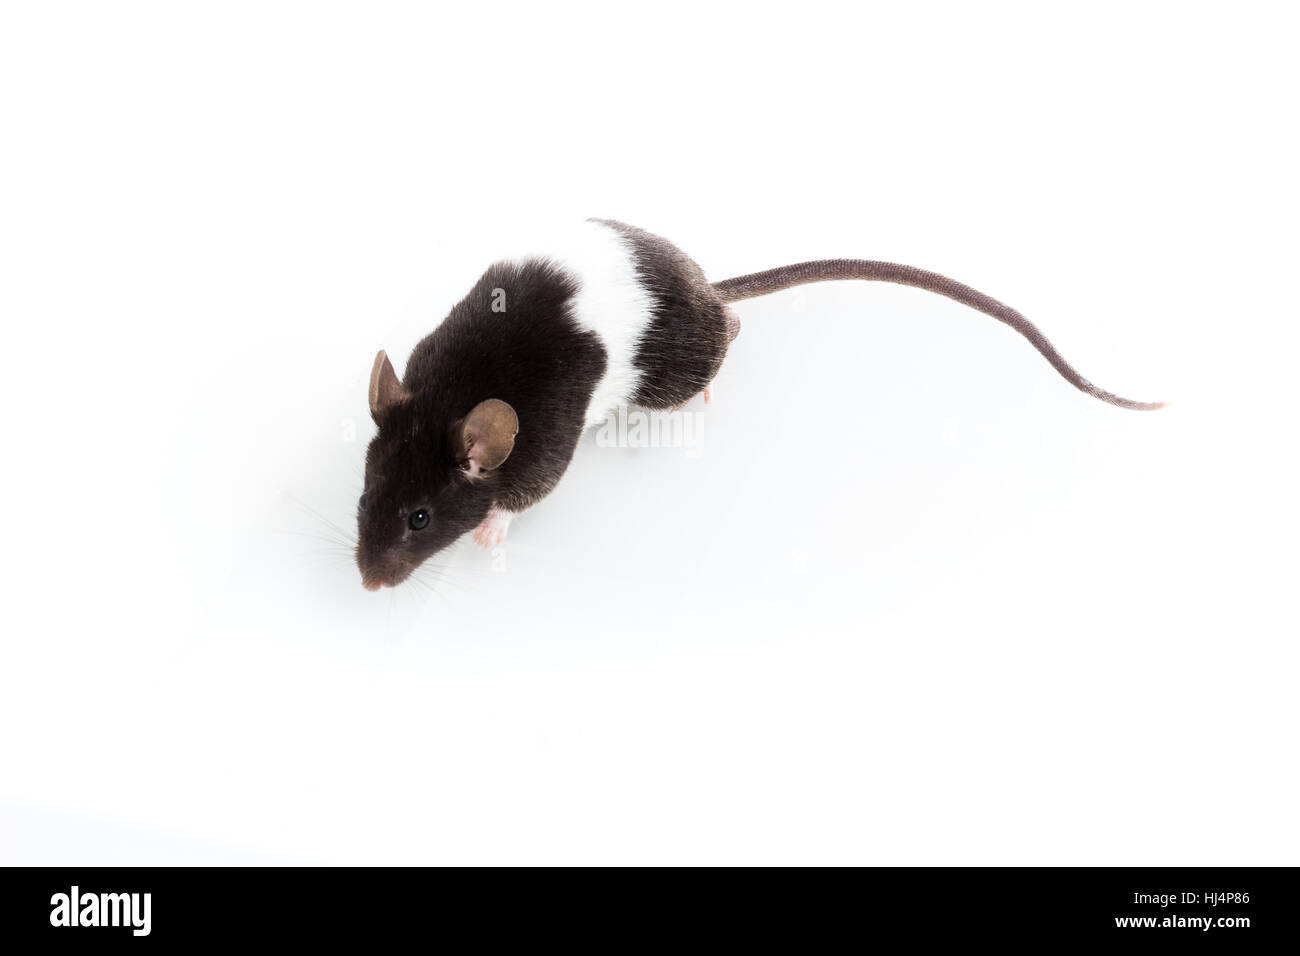 https://c8.alamy.com/comp/HJ4P86/brattleboro-rat-lab-rat-on-white-background-HJ4P86.jpg